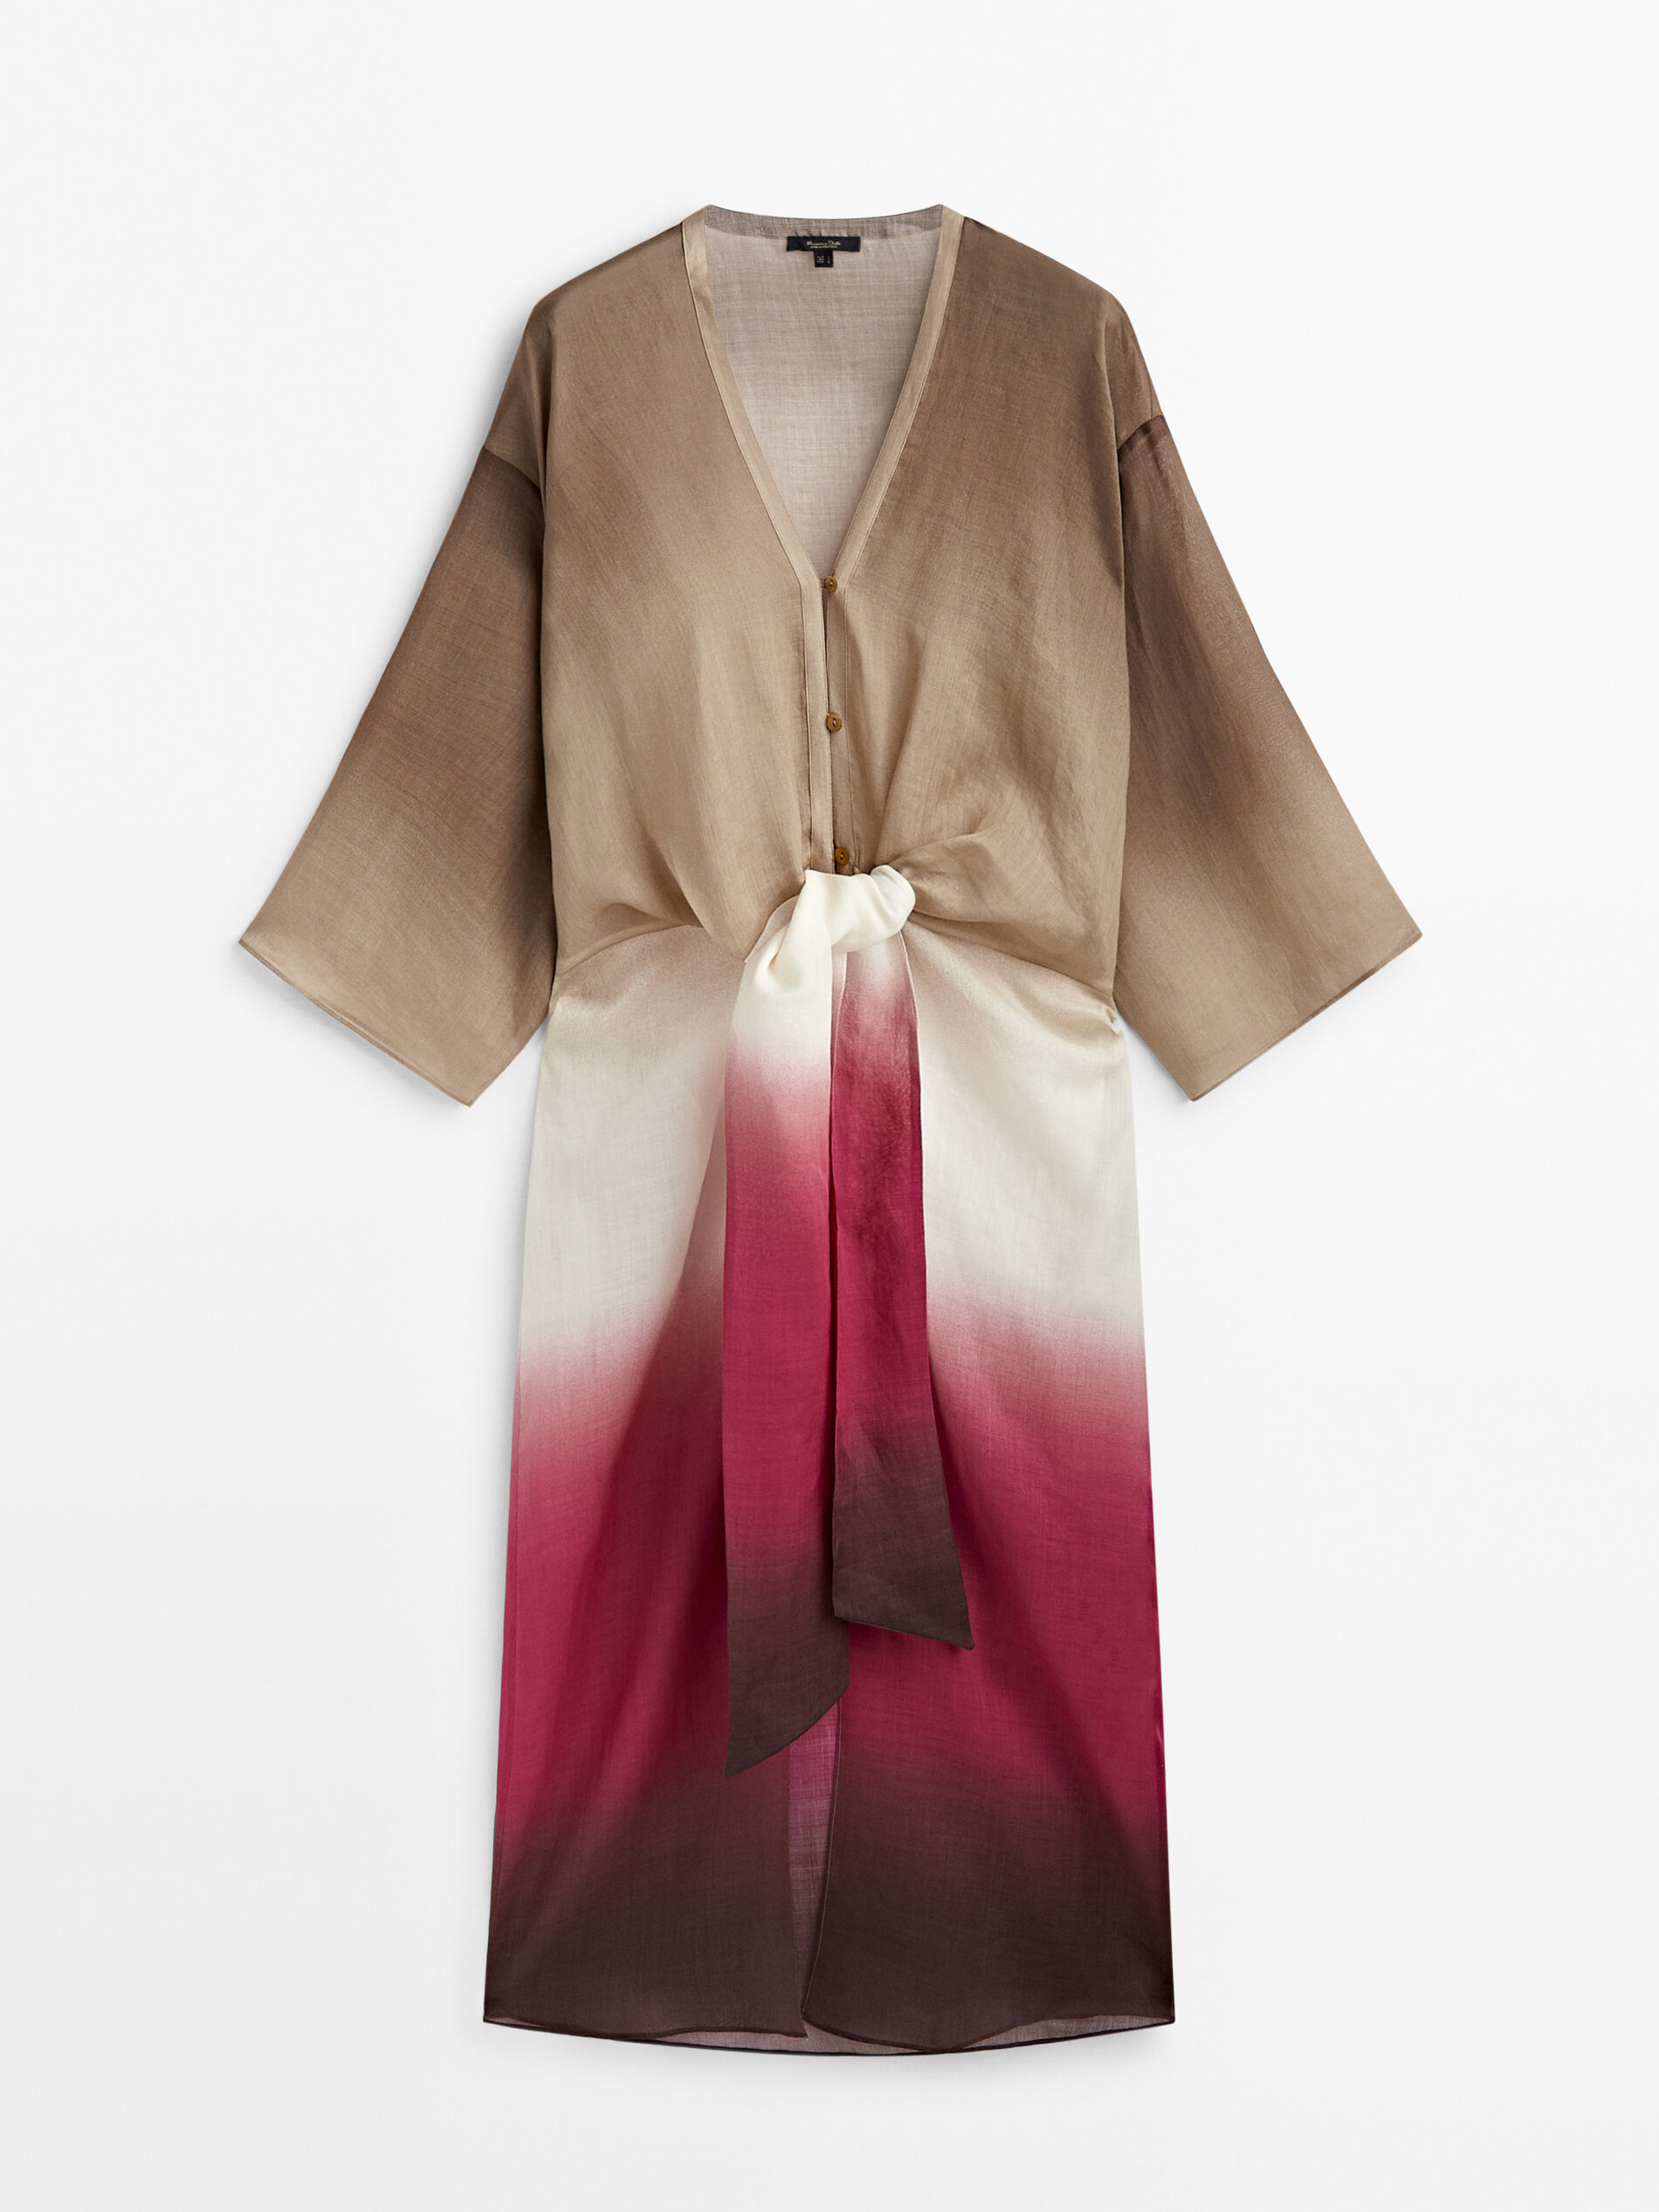 Vestido túnica tie dye de Massimo Dutti (59,95 euros).